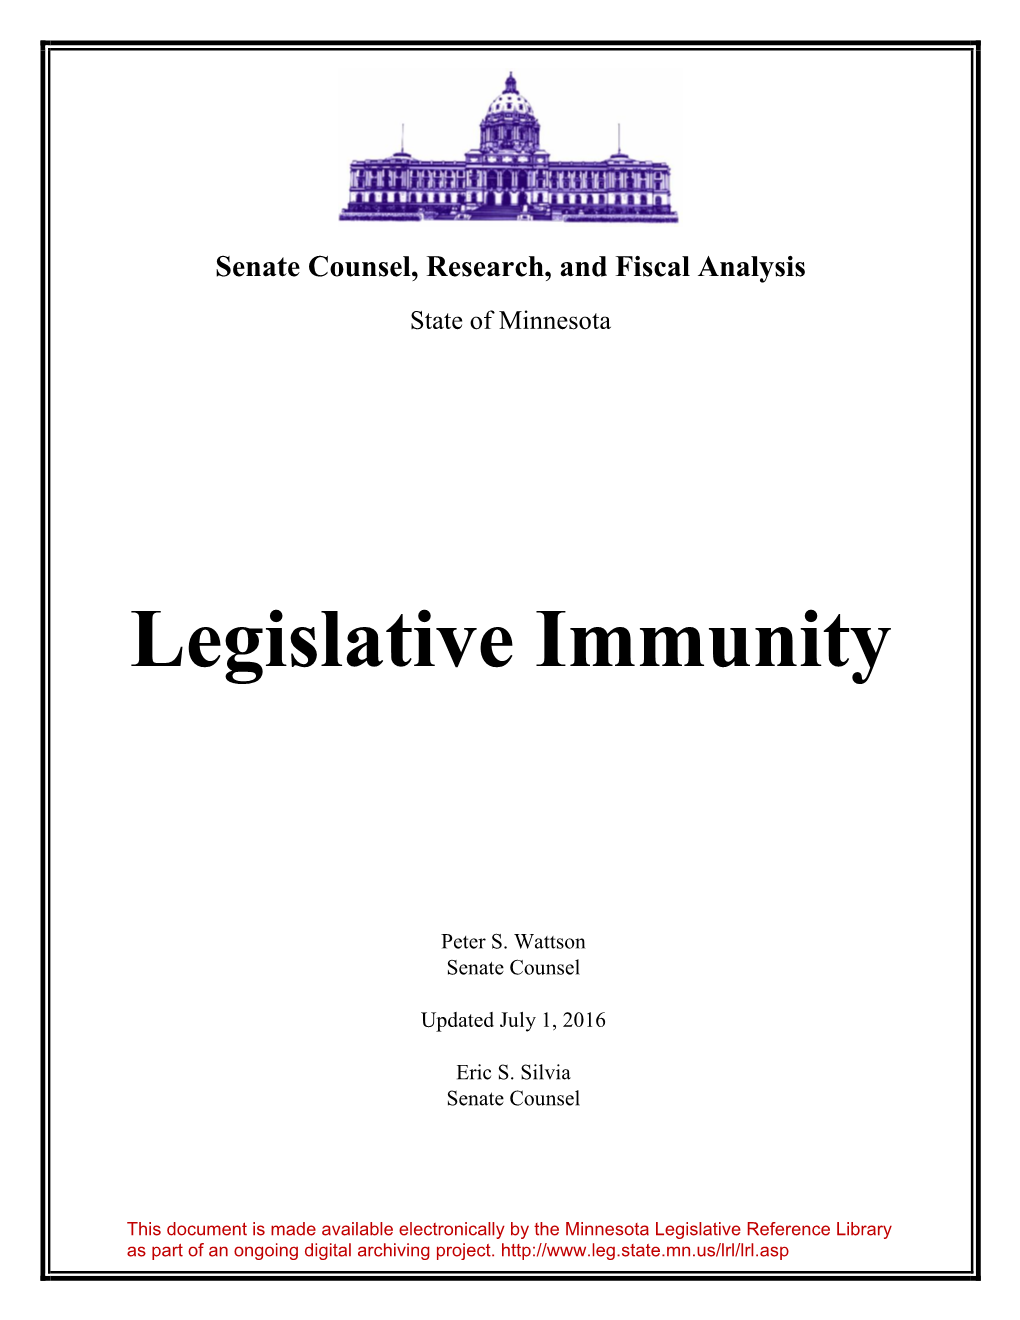 Legislative Immunity